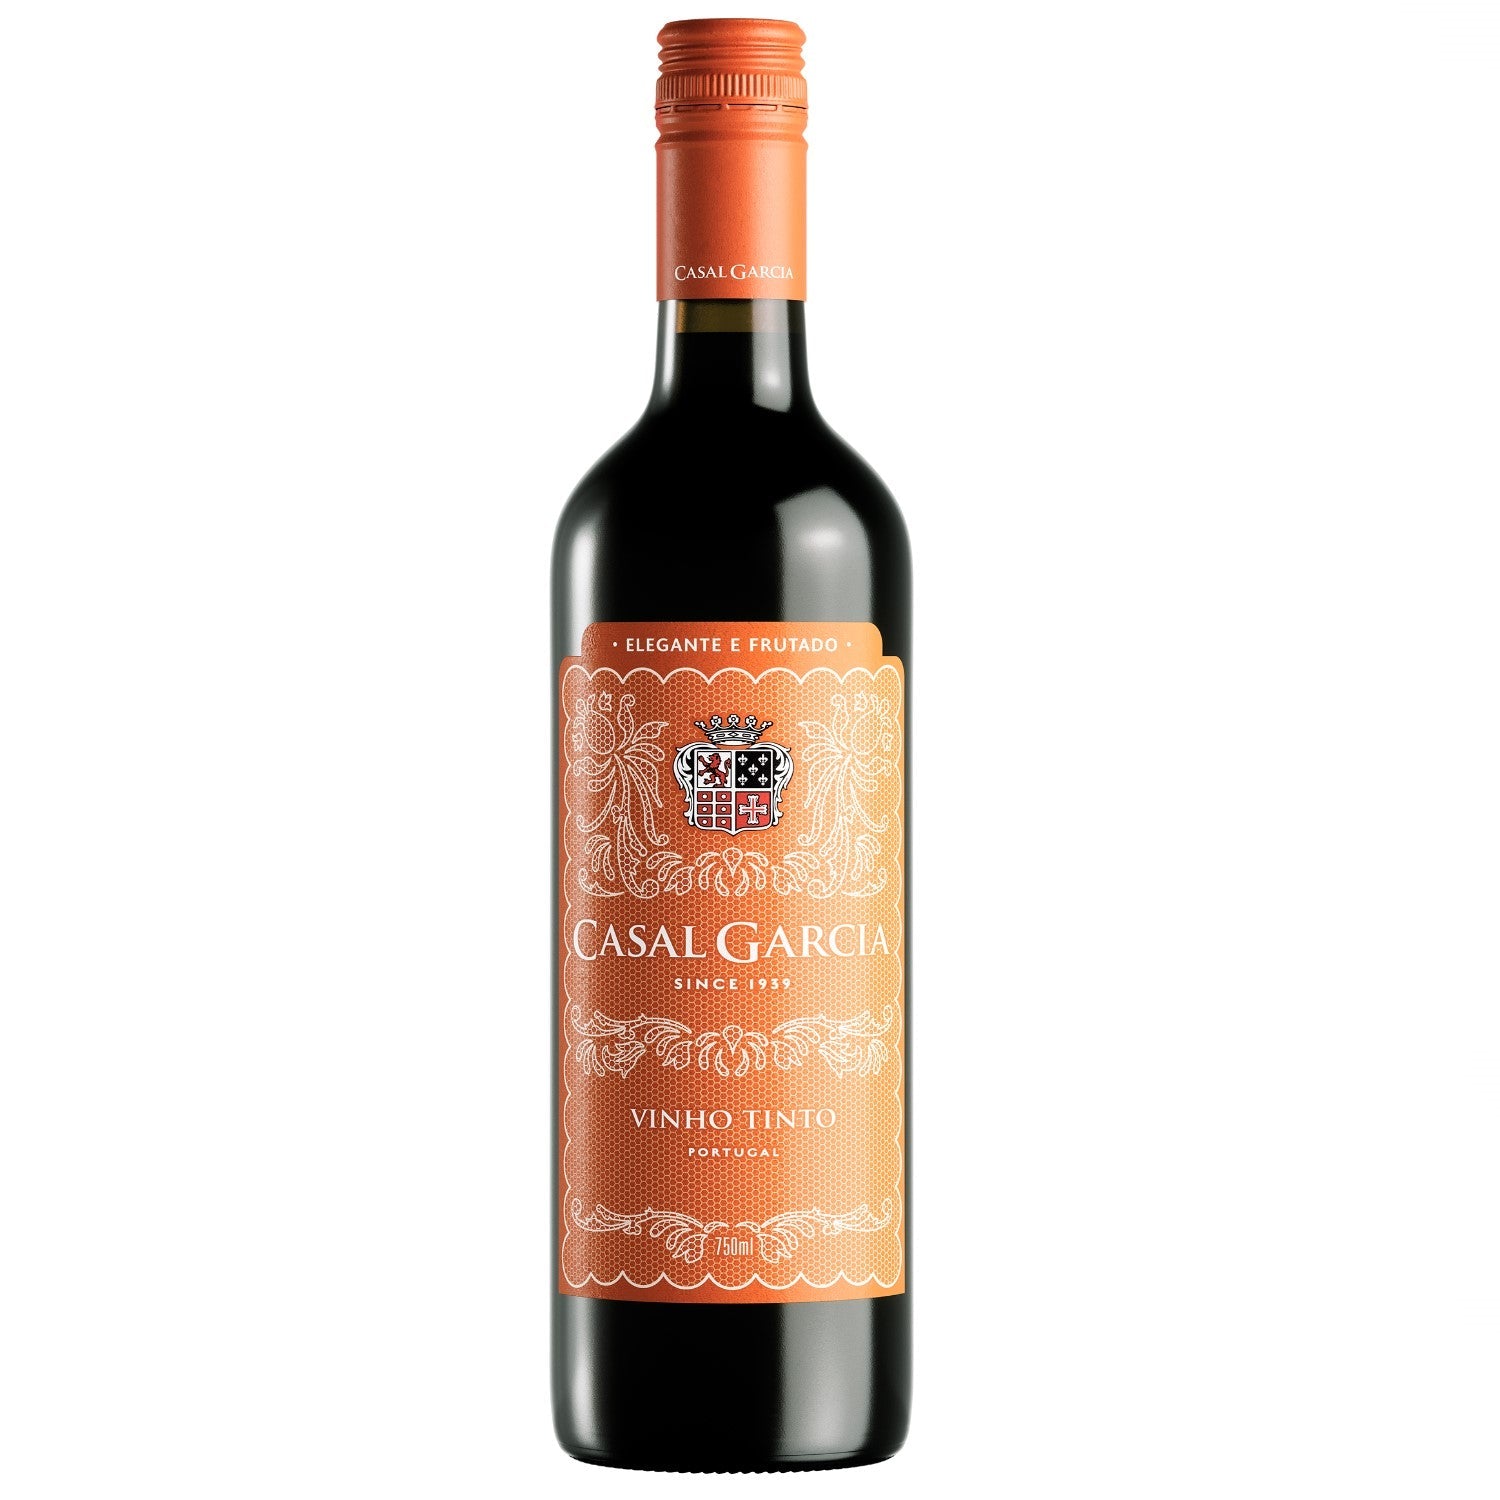 Casal Garcia Vinho Tinto IG Lisboa Rotwein Wein trocken Portugal (6 x 0.75l) - Versanel -